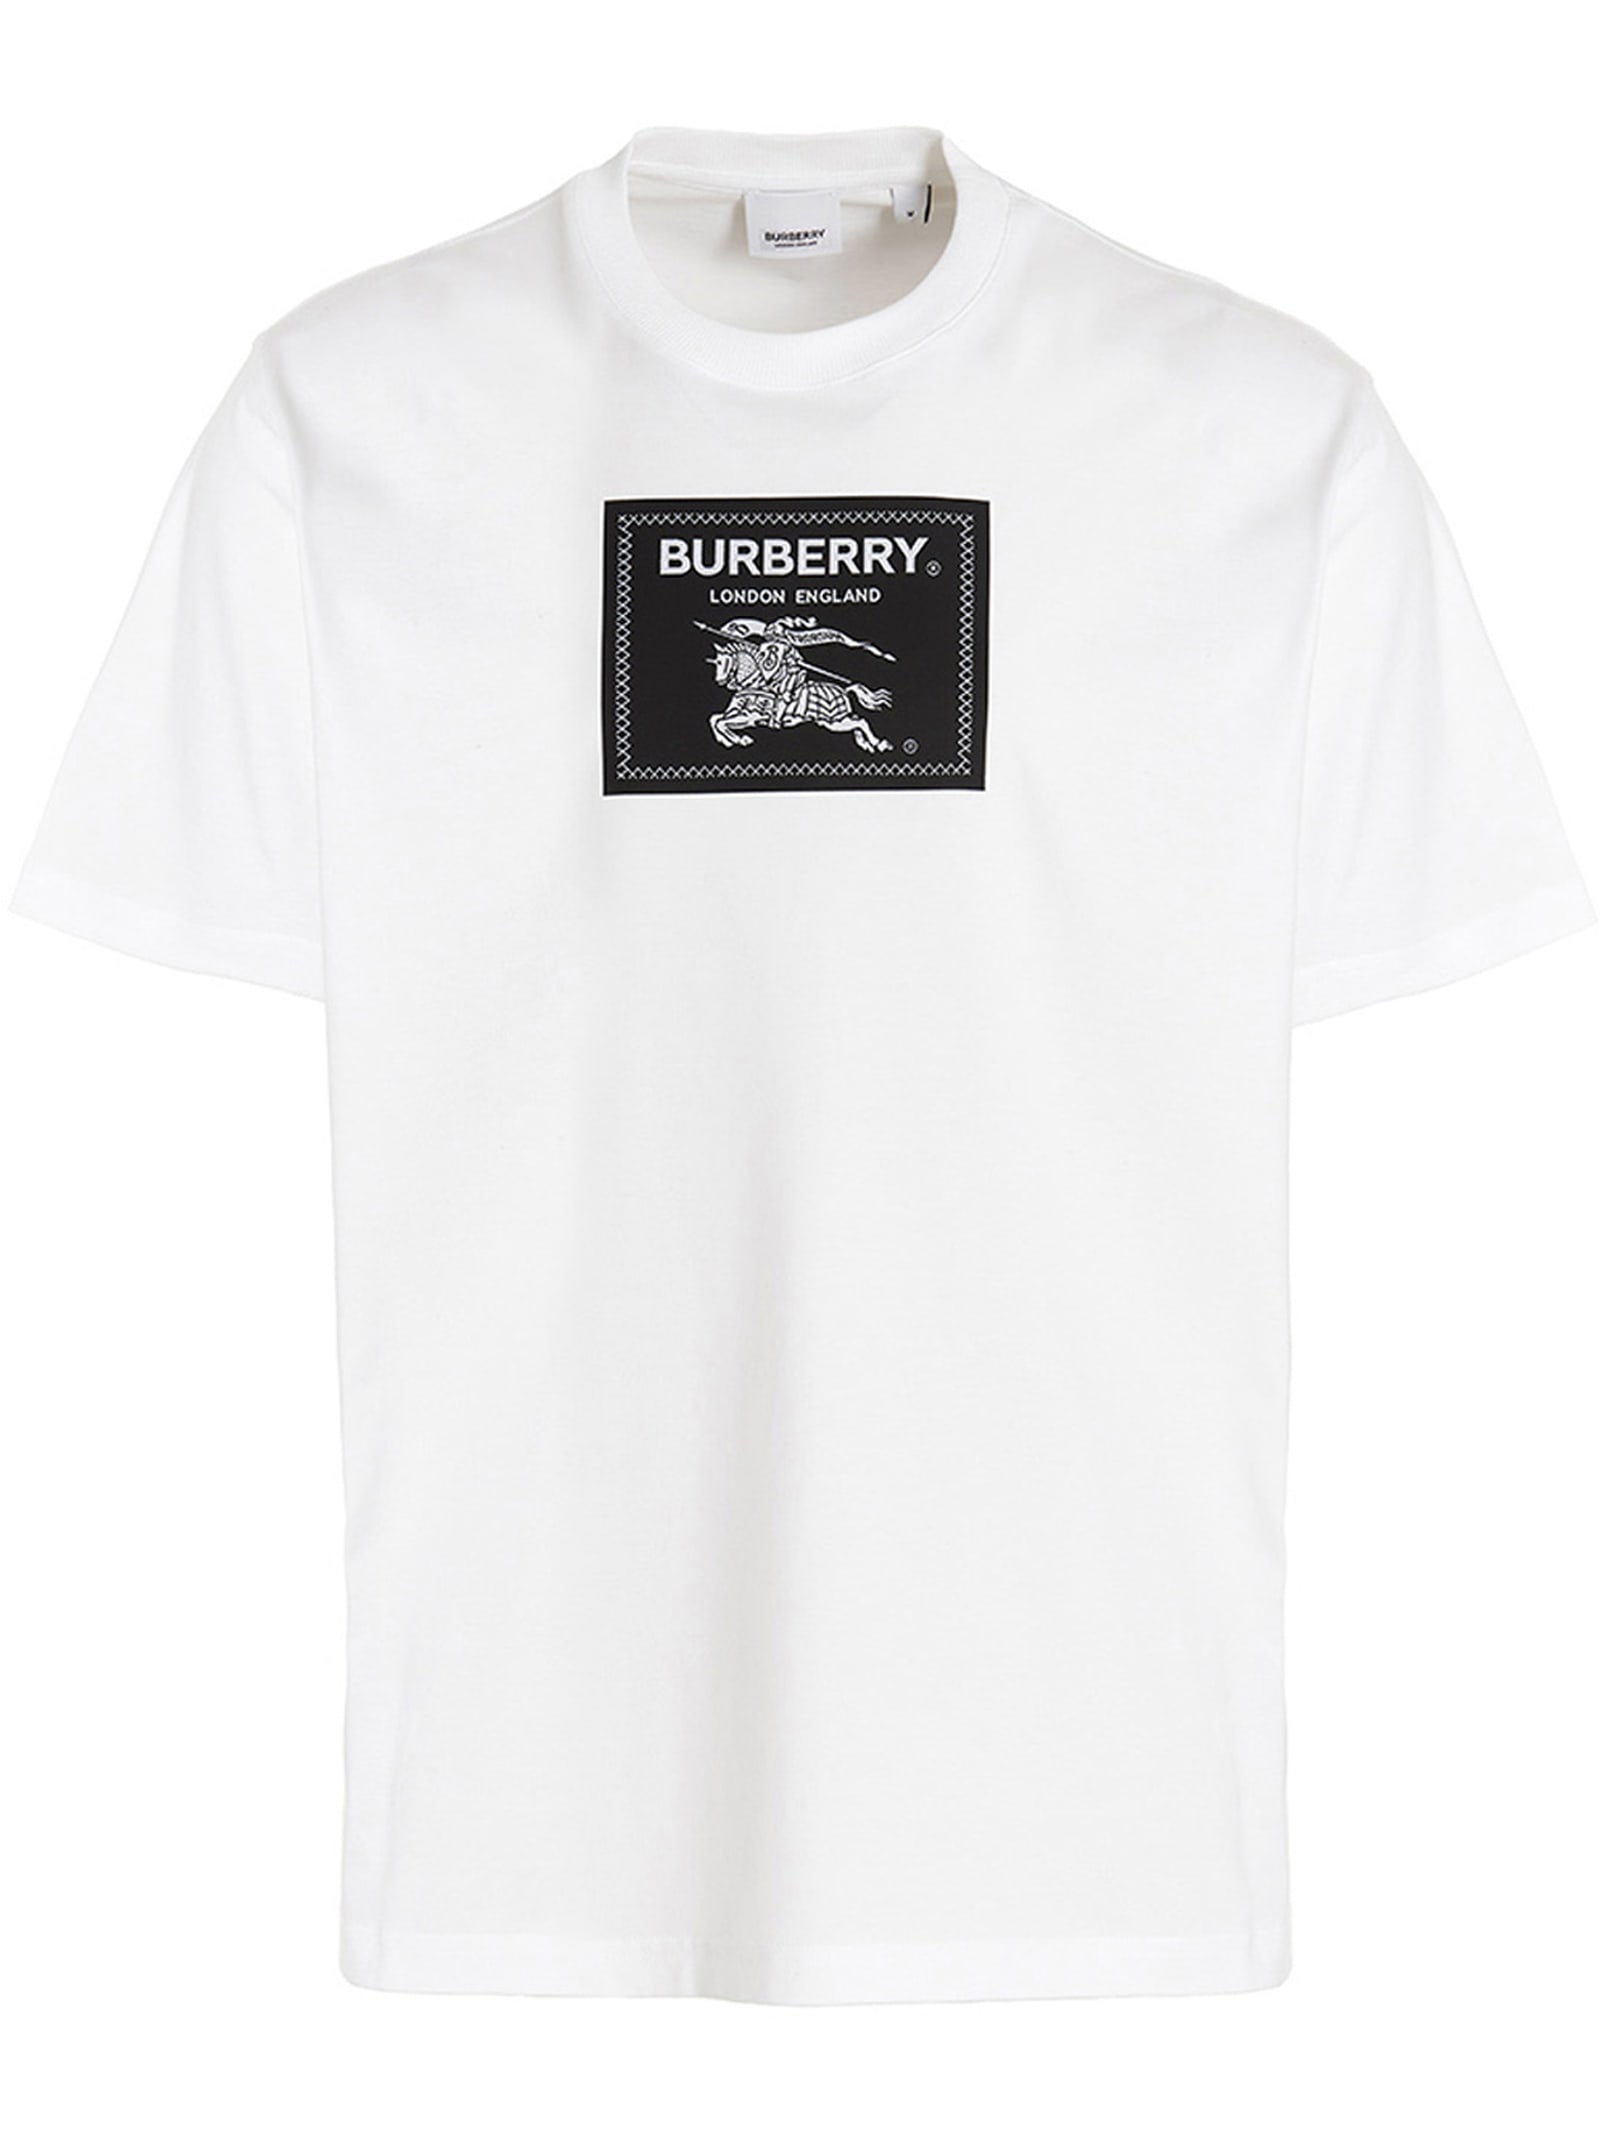 BURBERRY PRORSUM T-SHIRT